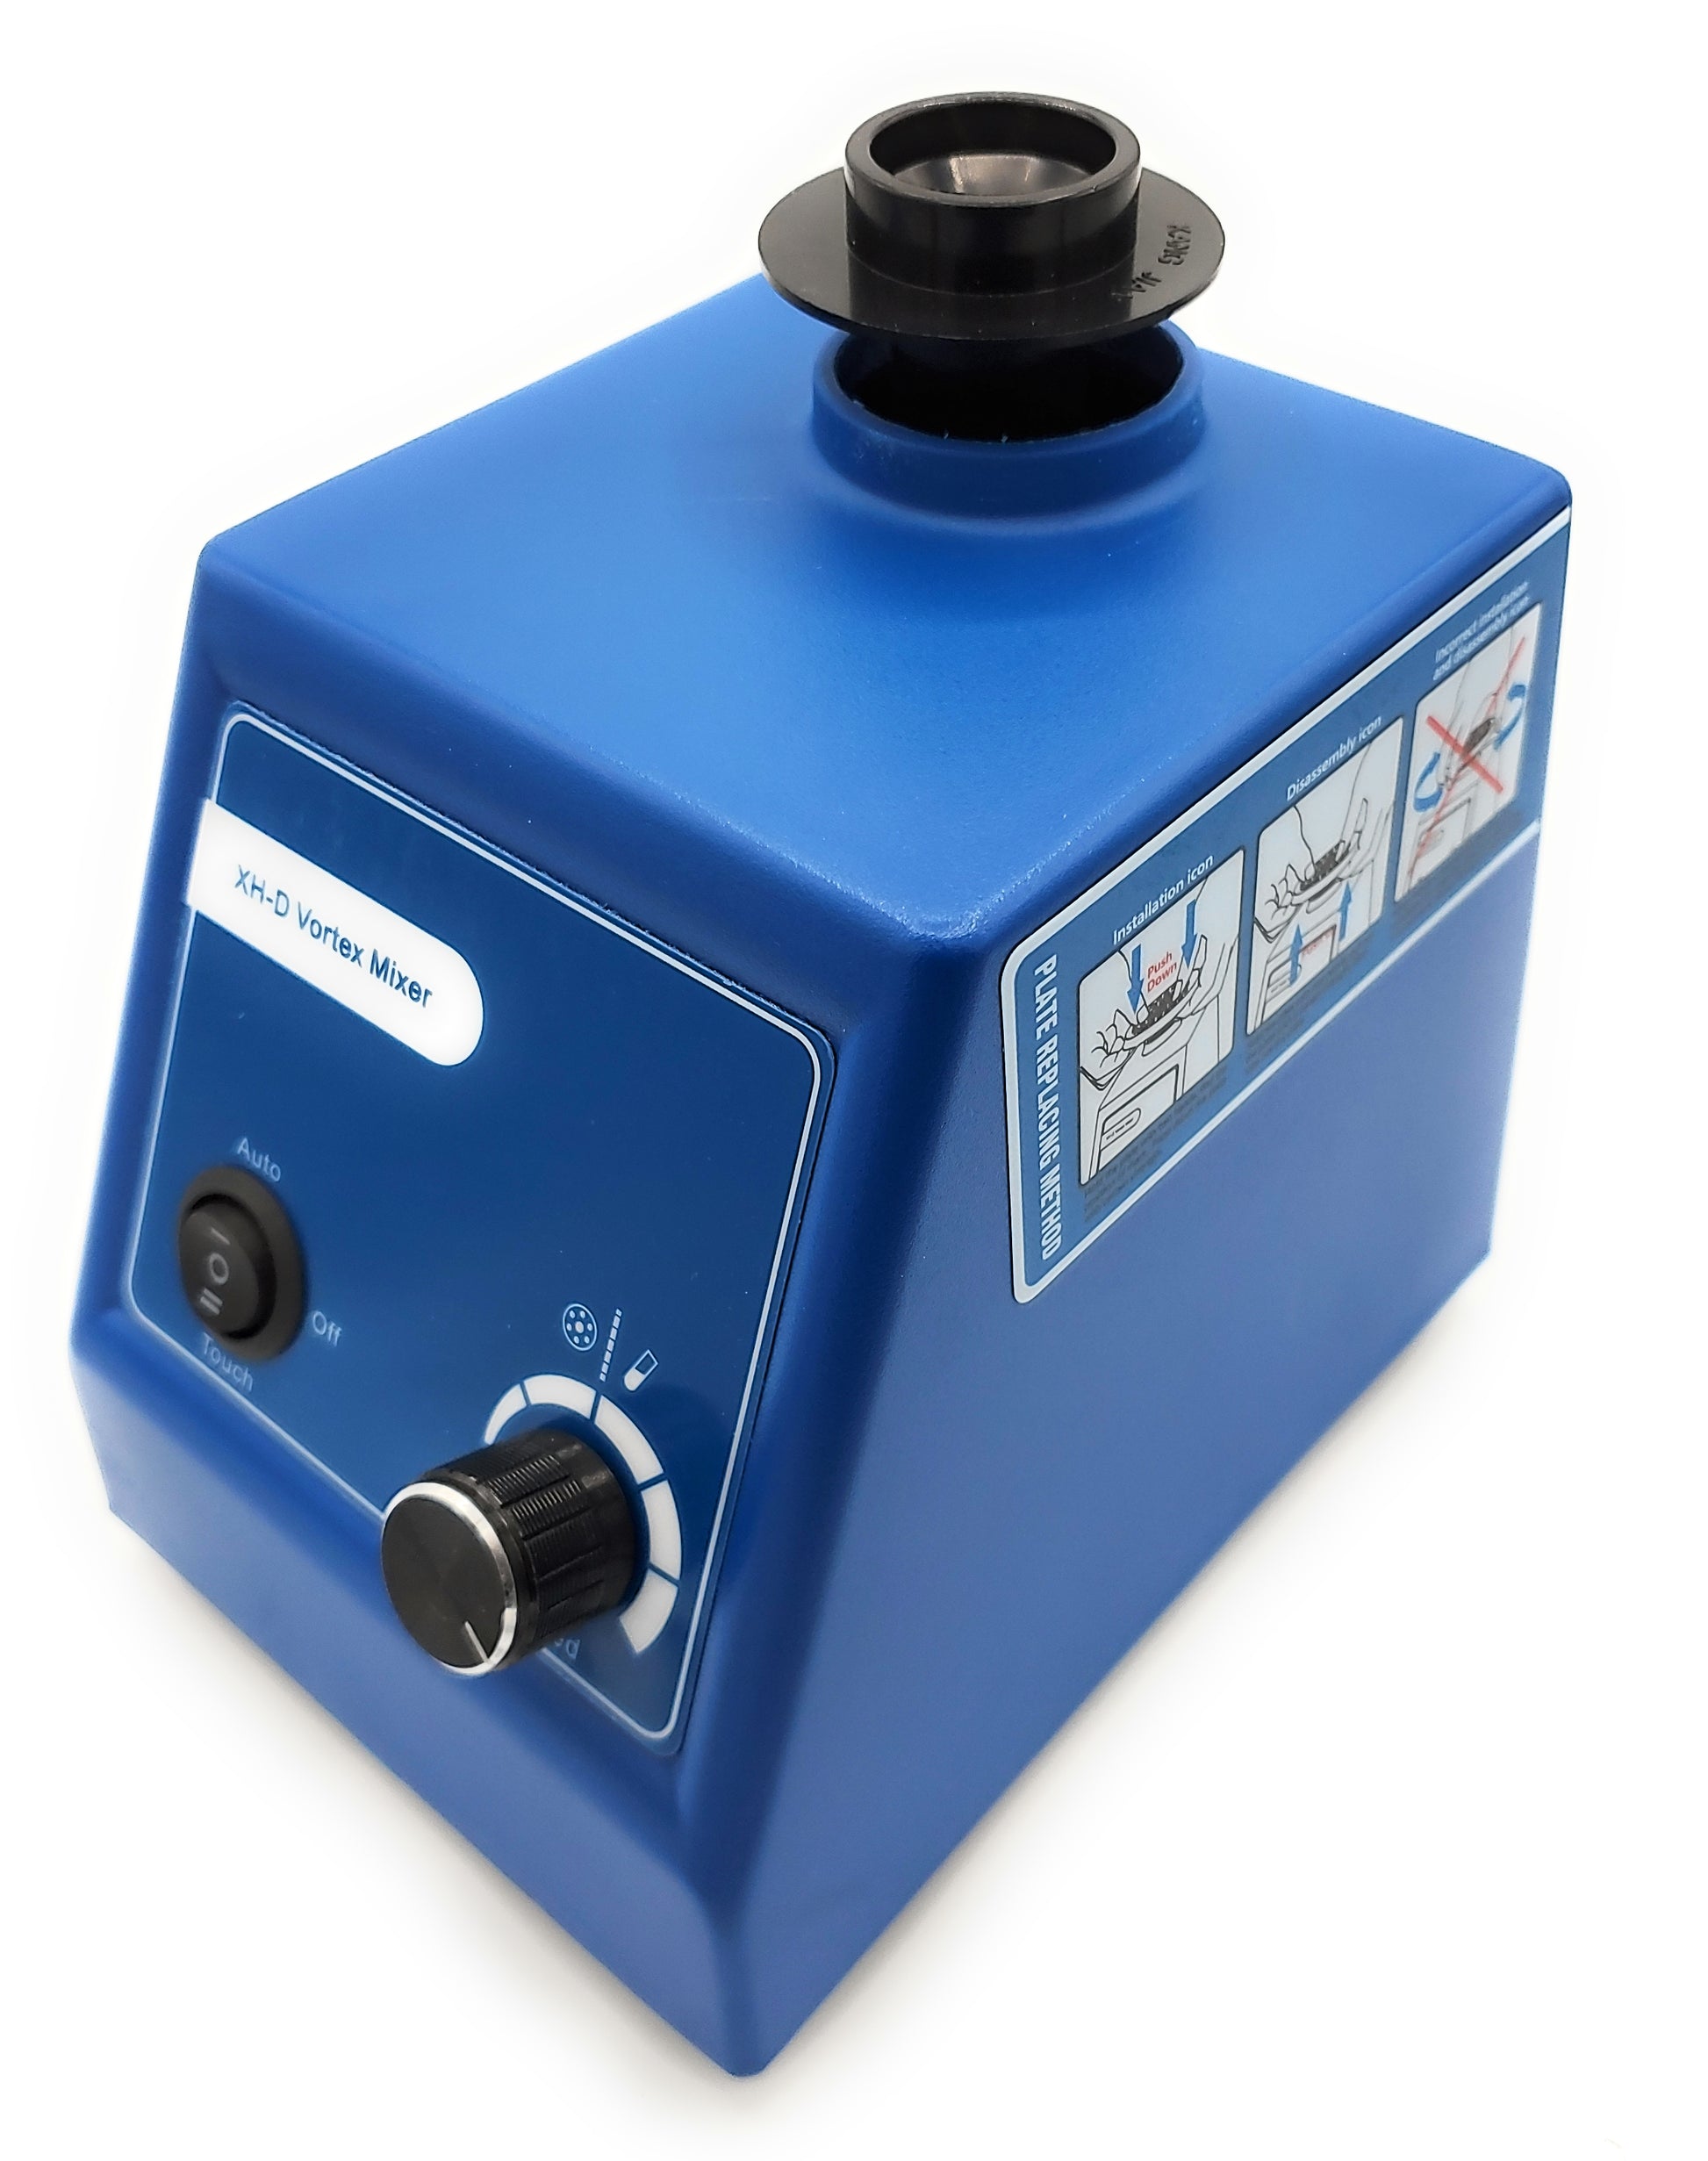 Portable vortex mixer MV-100, a vortex mixer for short-term inching mixing,  fast speed, uniform and thorough mixing - AliExpress